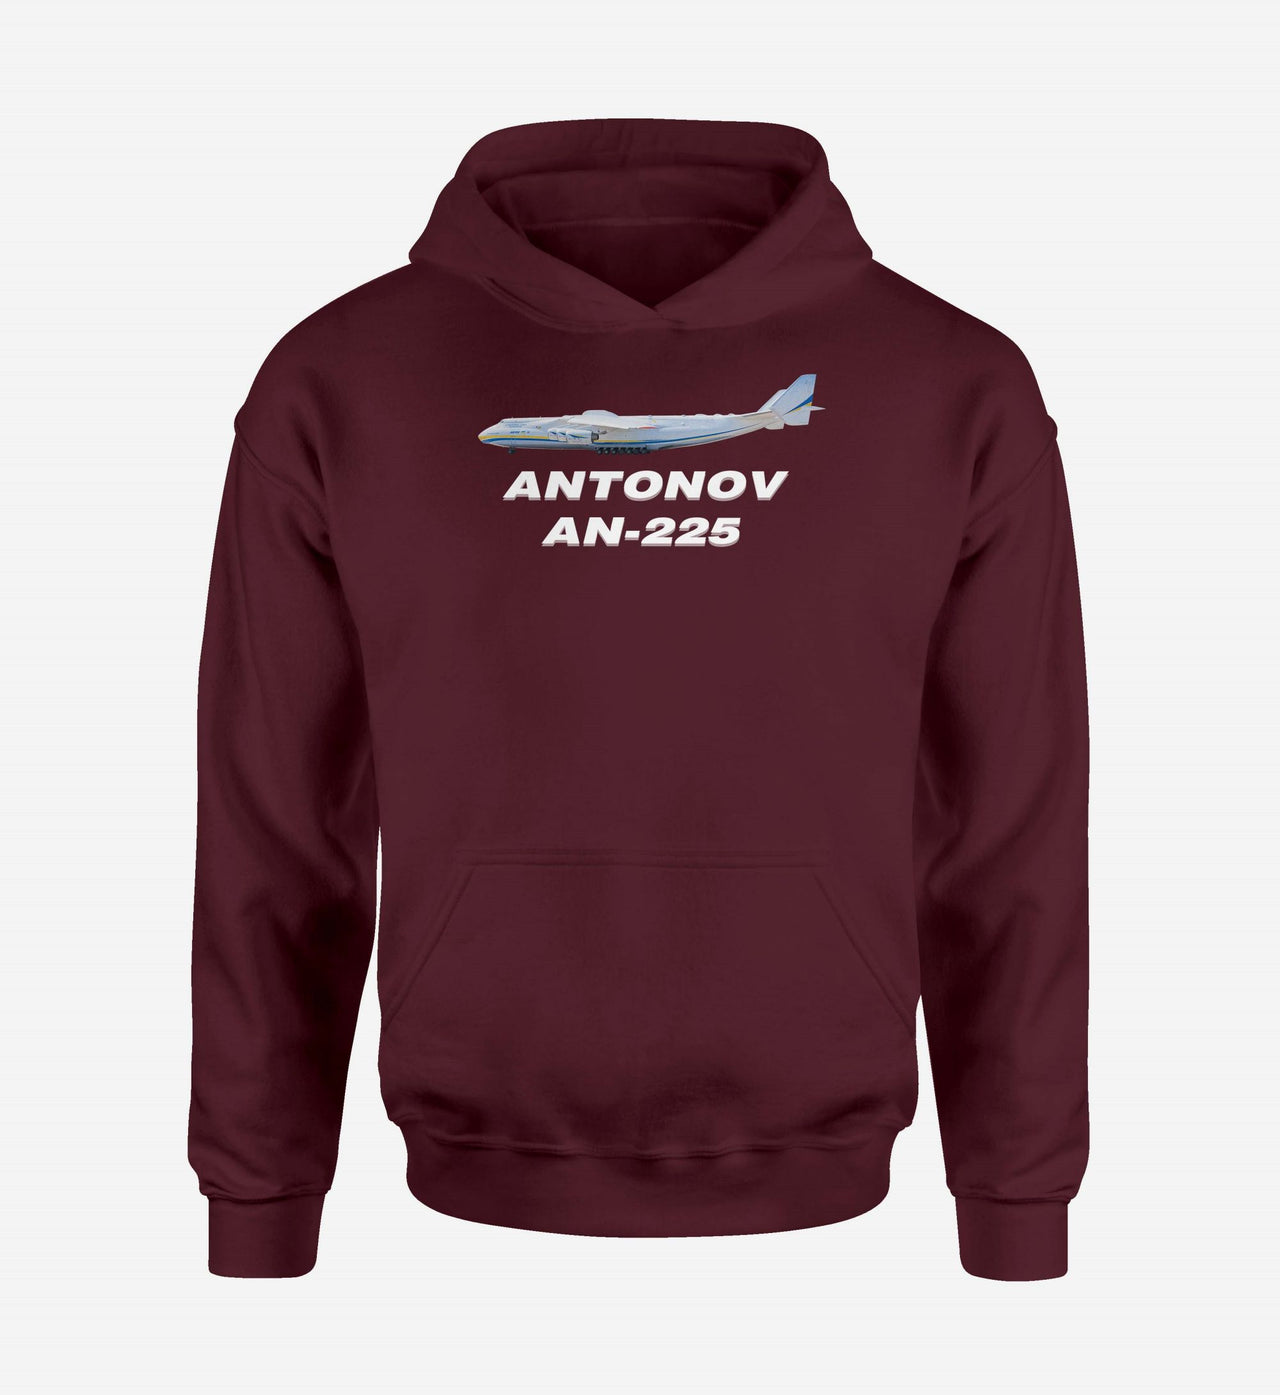 The Antonov AN-225 Designed Hoodies